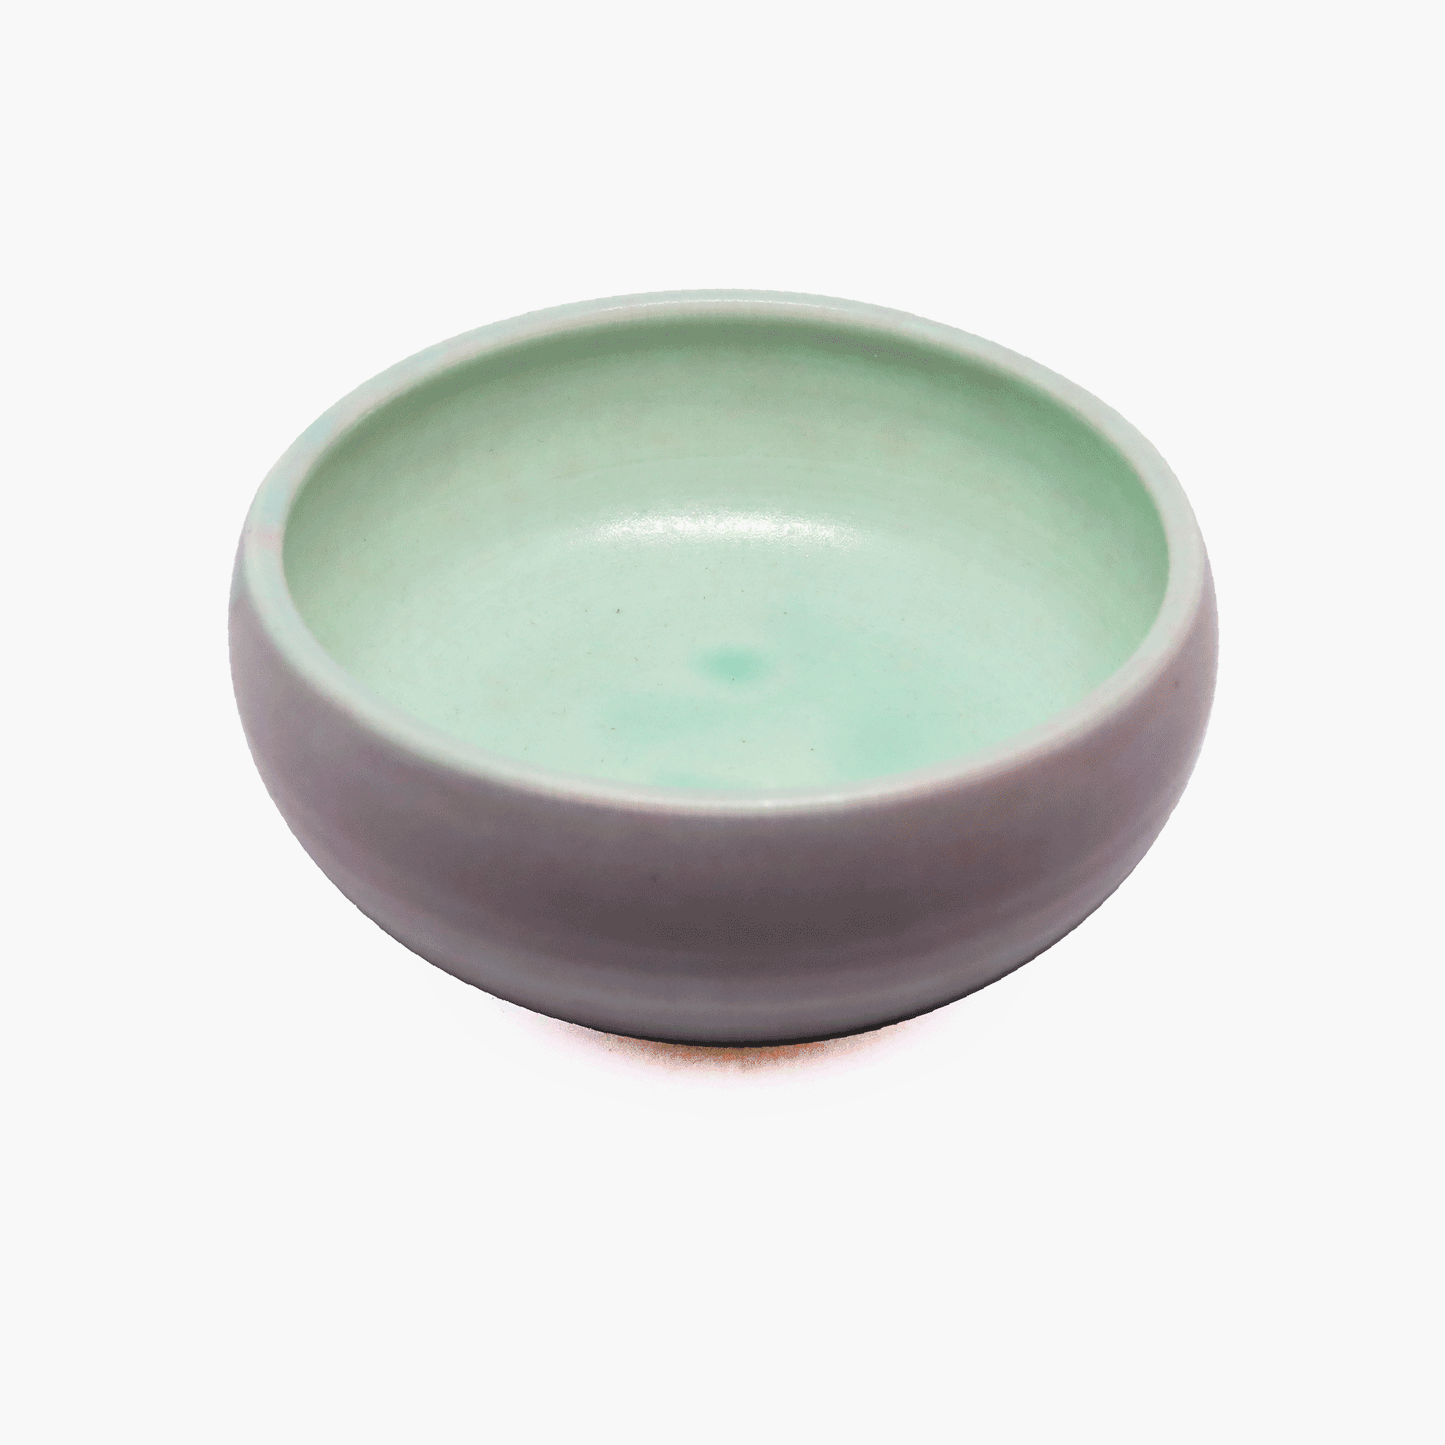 Bubble Dip Bowl in Sea Foam and Taupe Semi-Porcelain